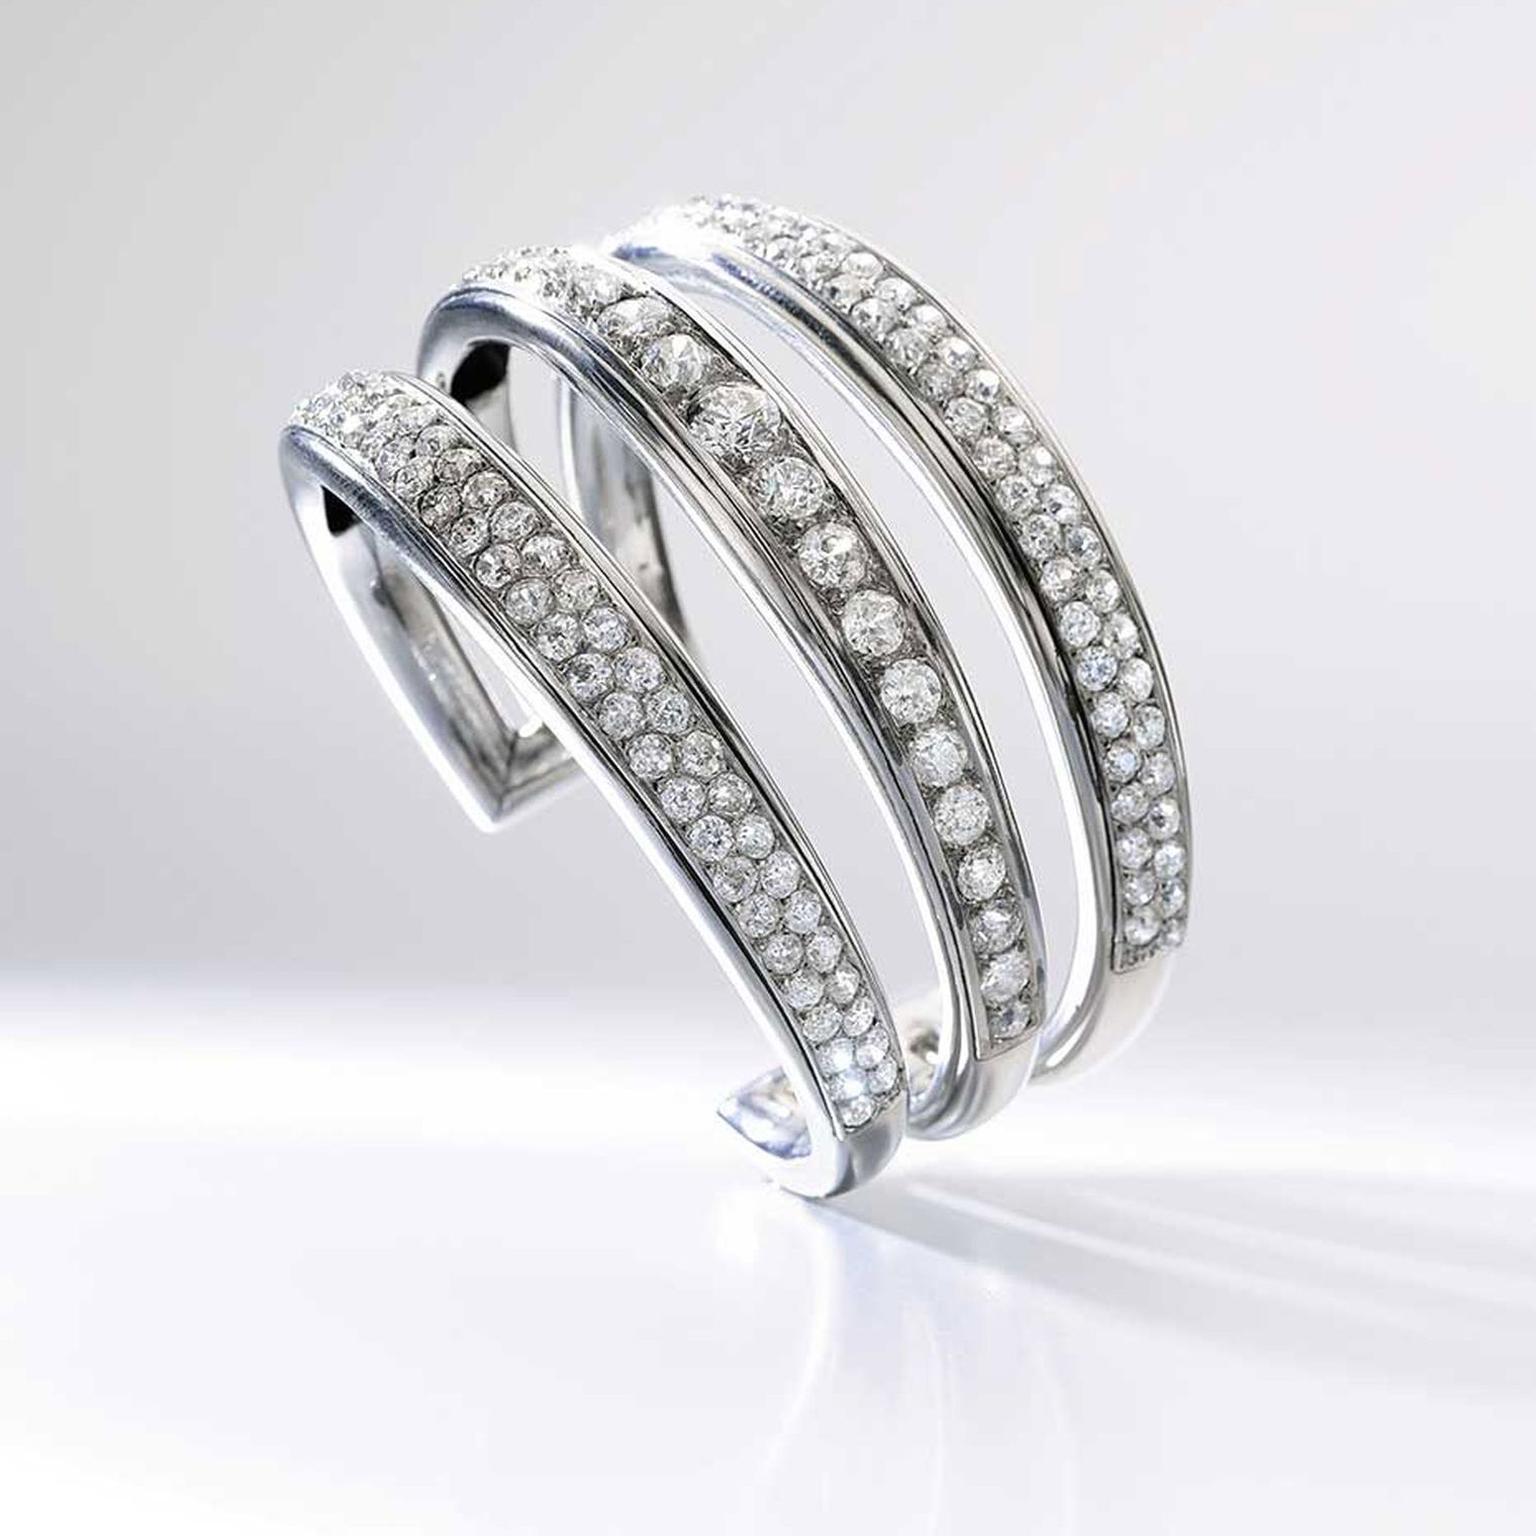 Suzanne Belperron diamond Mon bracelet. Sold for CHF 916,850 (estimate: CHF 37,000 - 50,000)